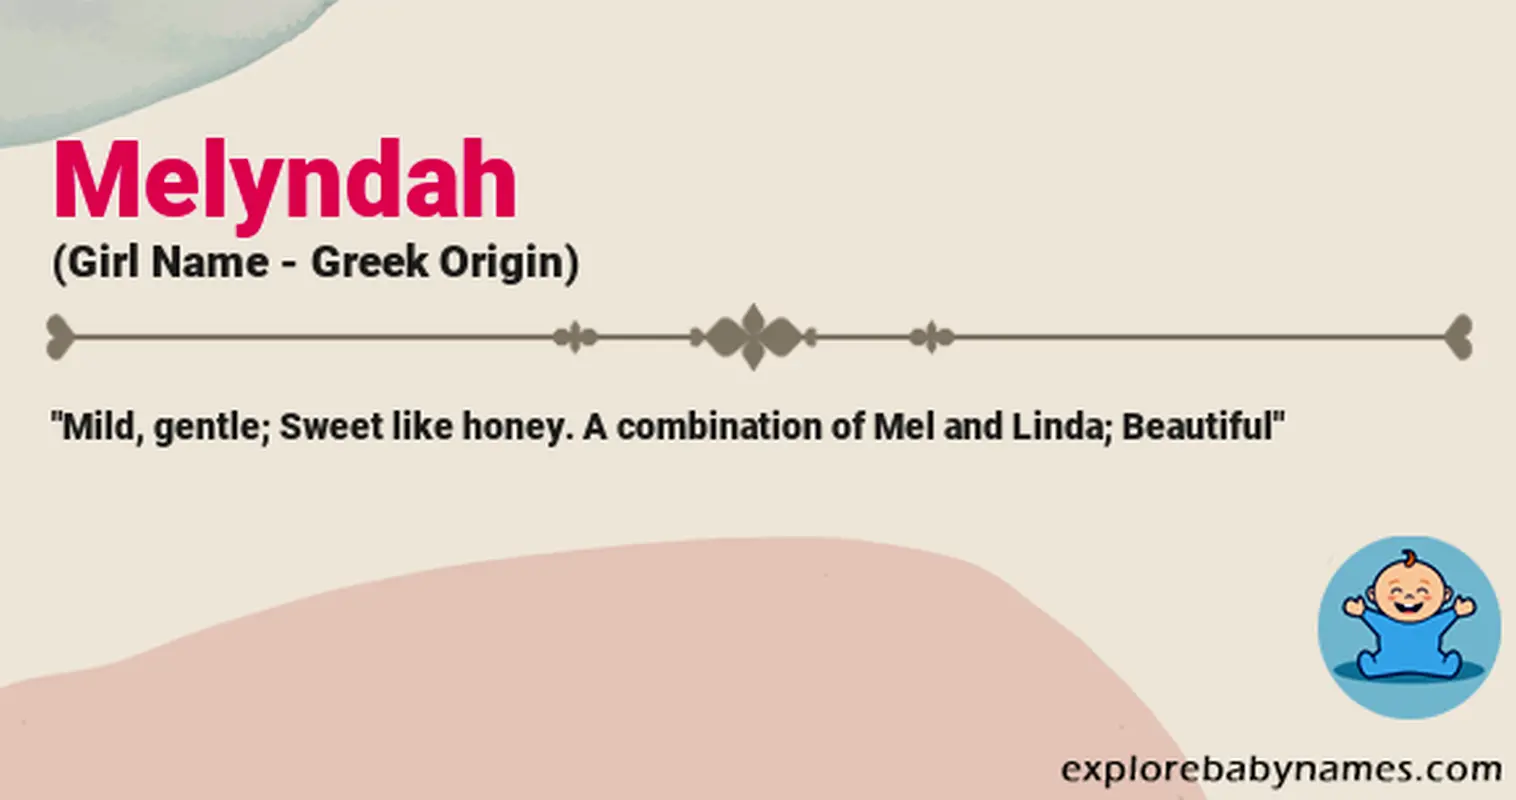 Meaning of Melyndah